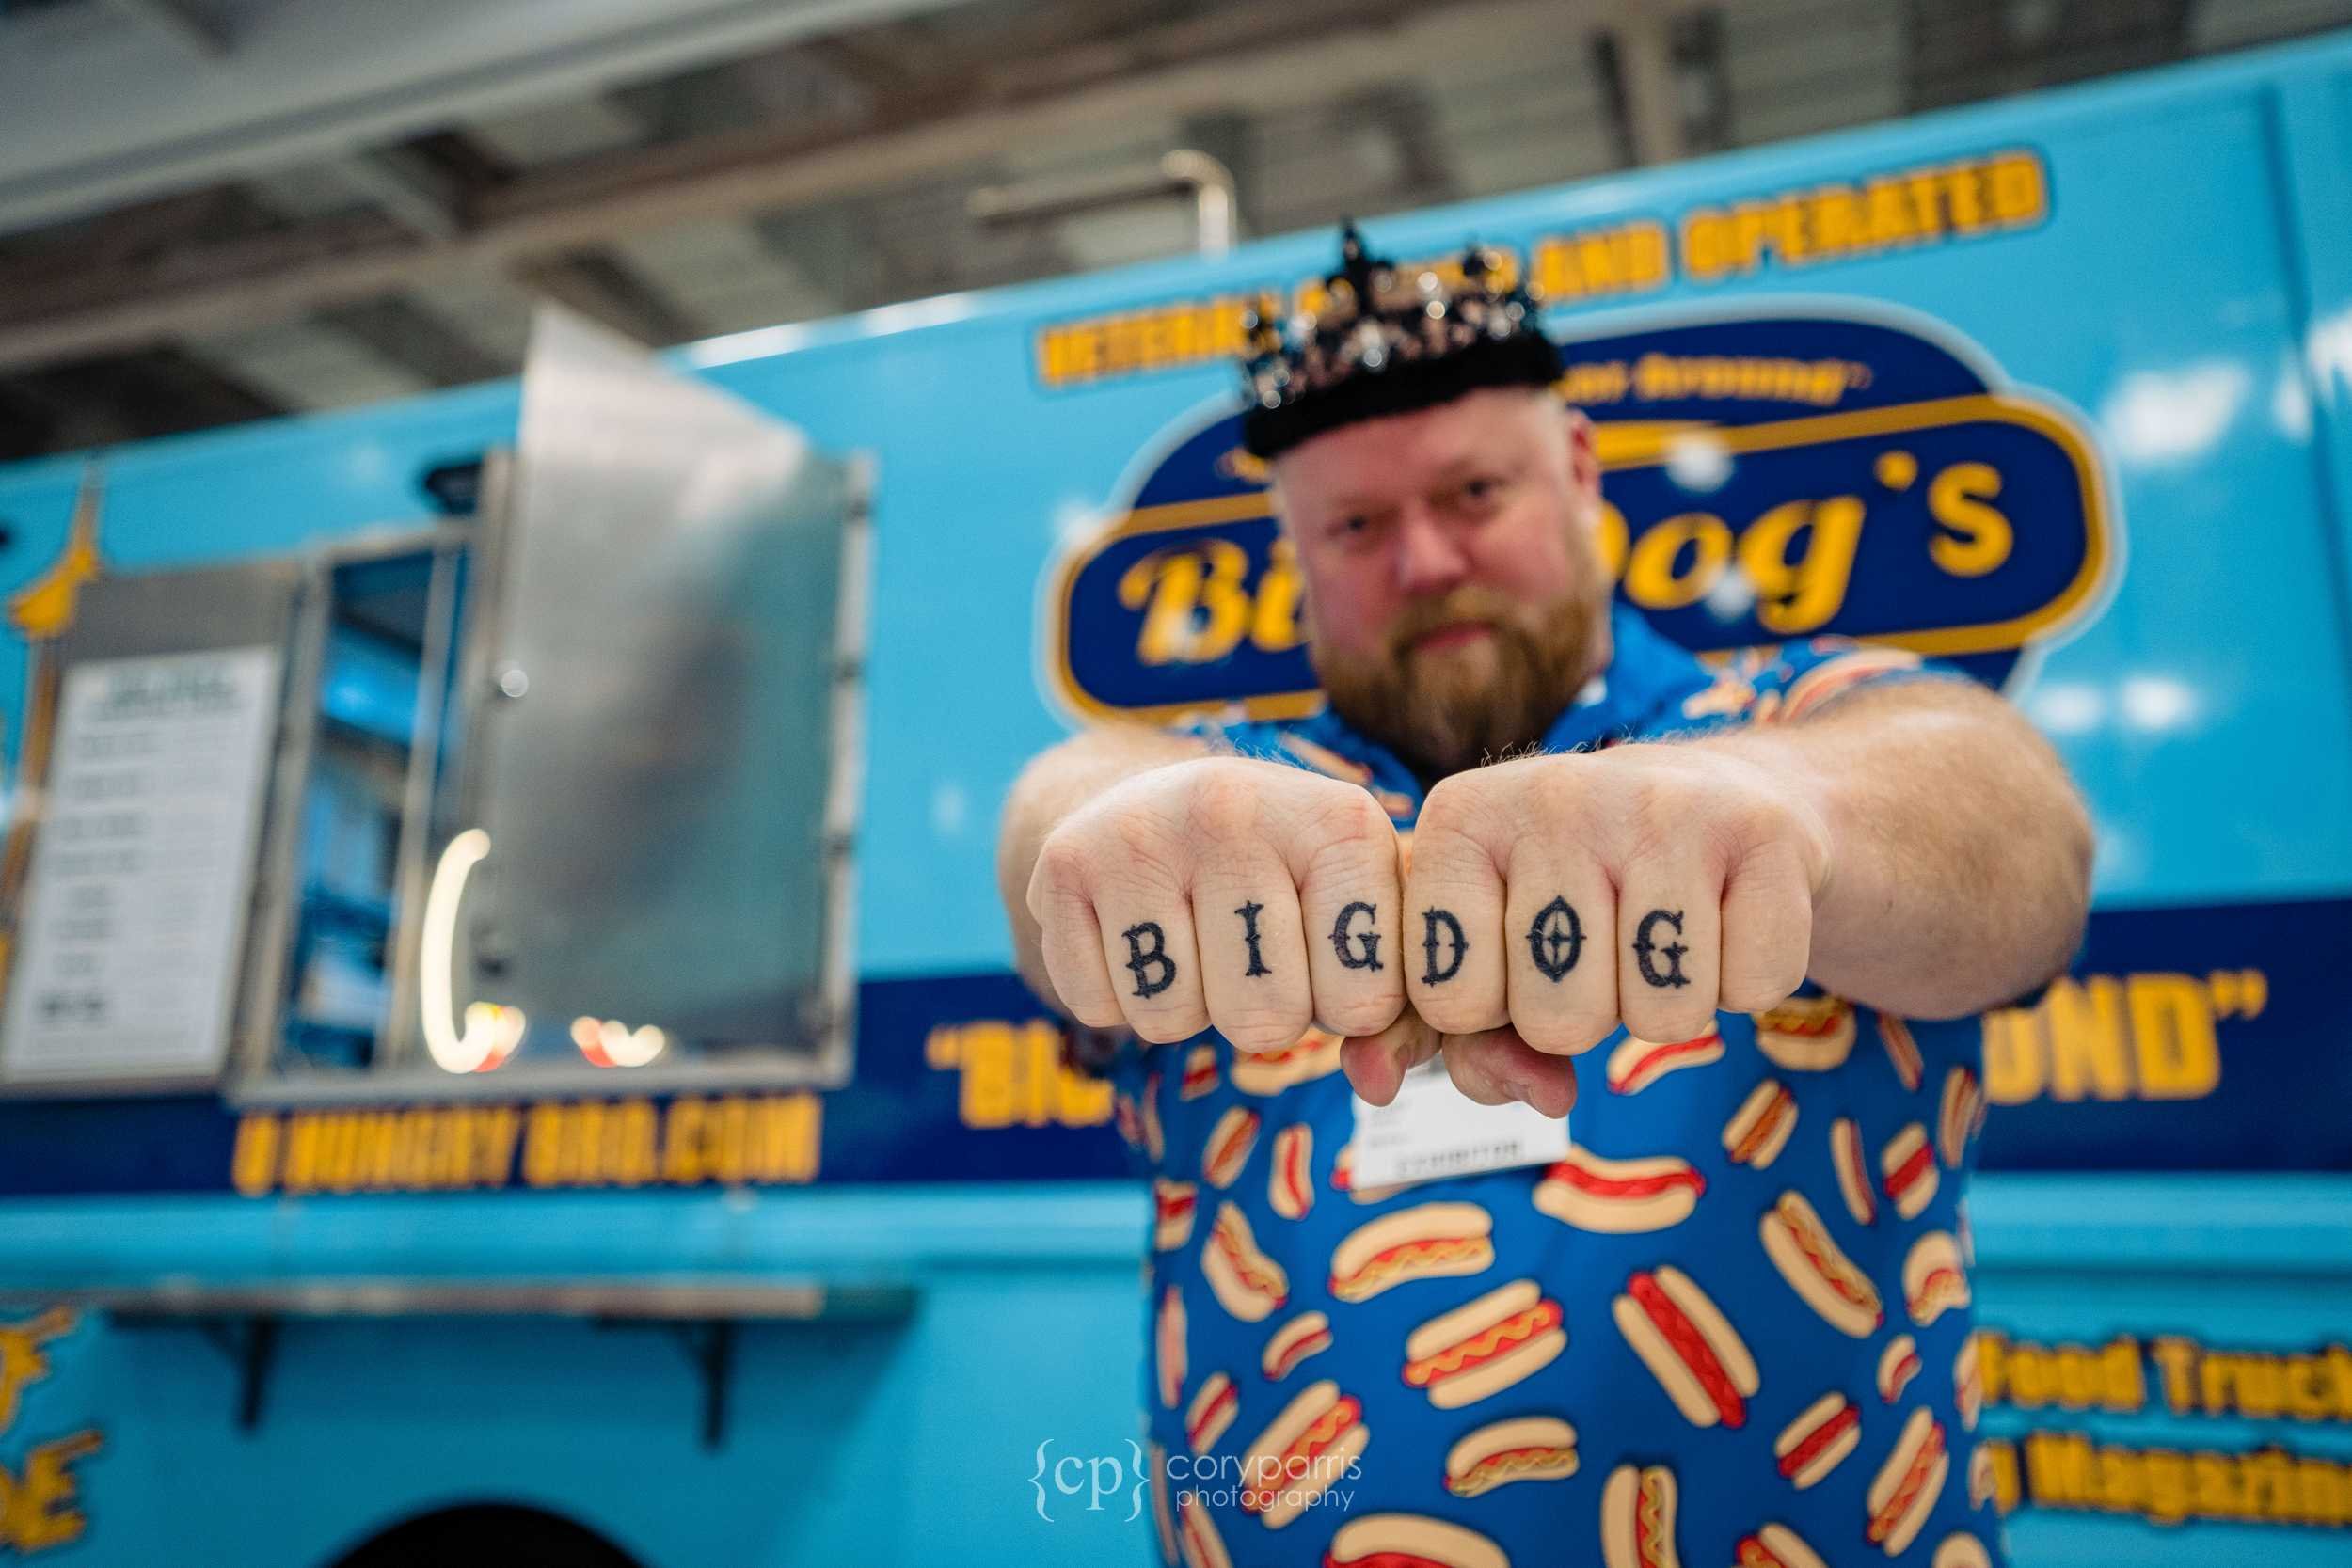  Big Dog’s hot dog truck with the Big Dog himself 